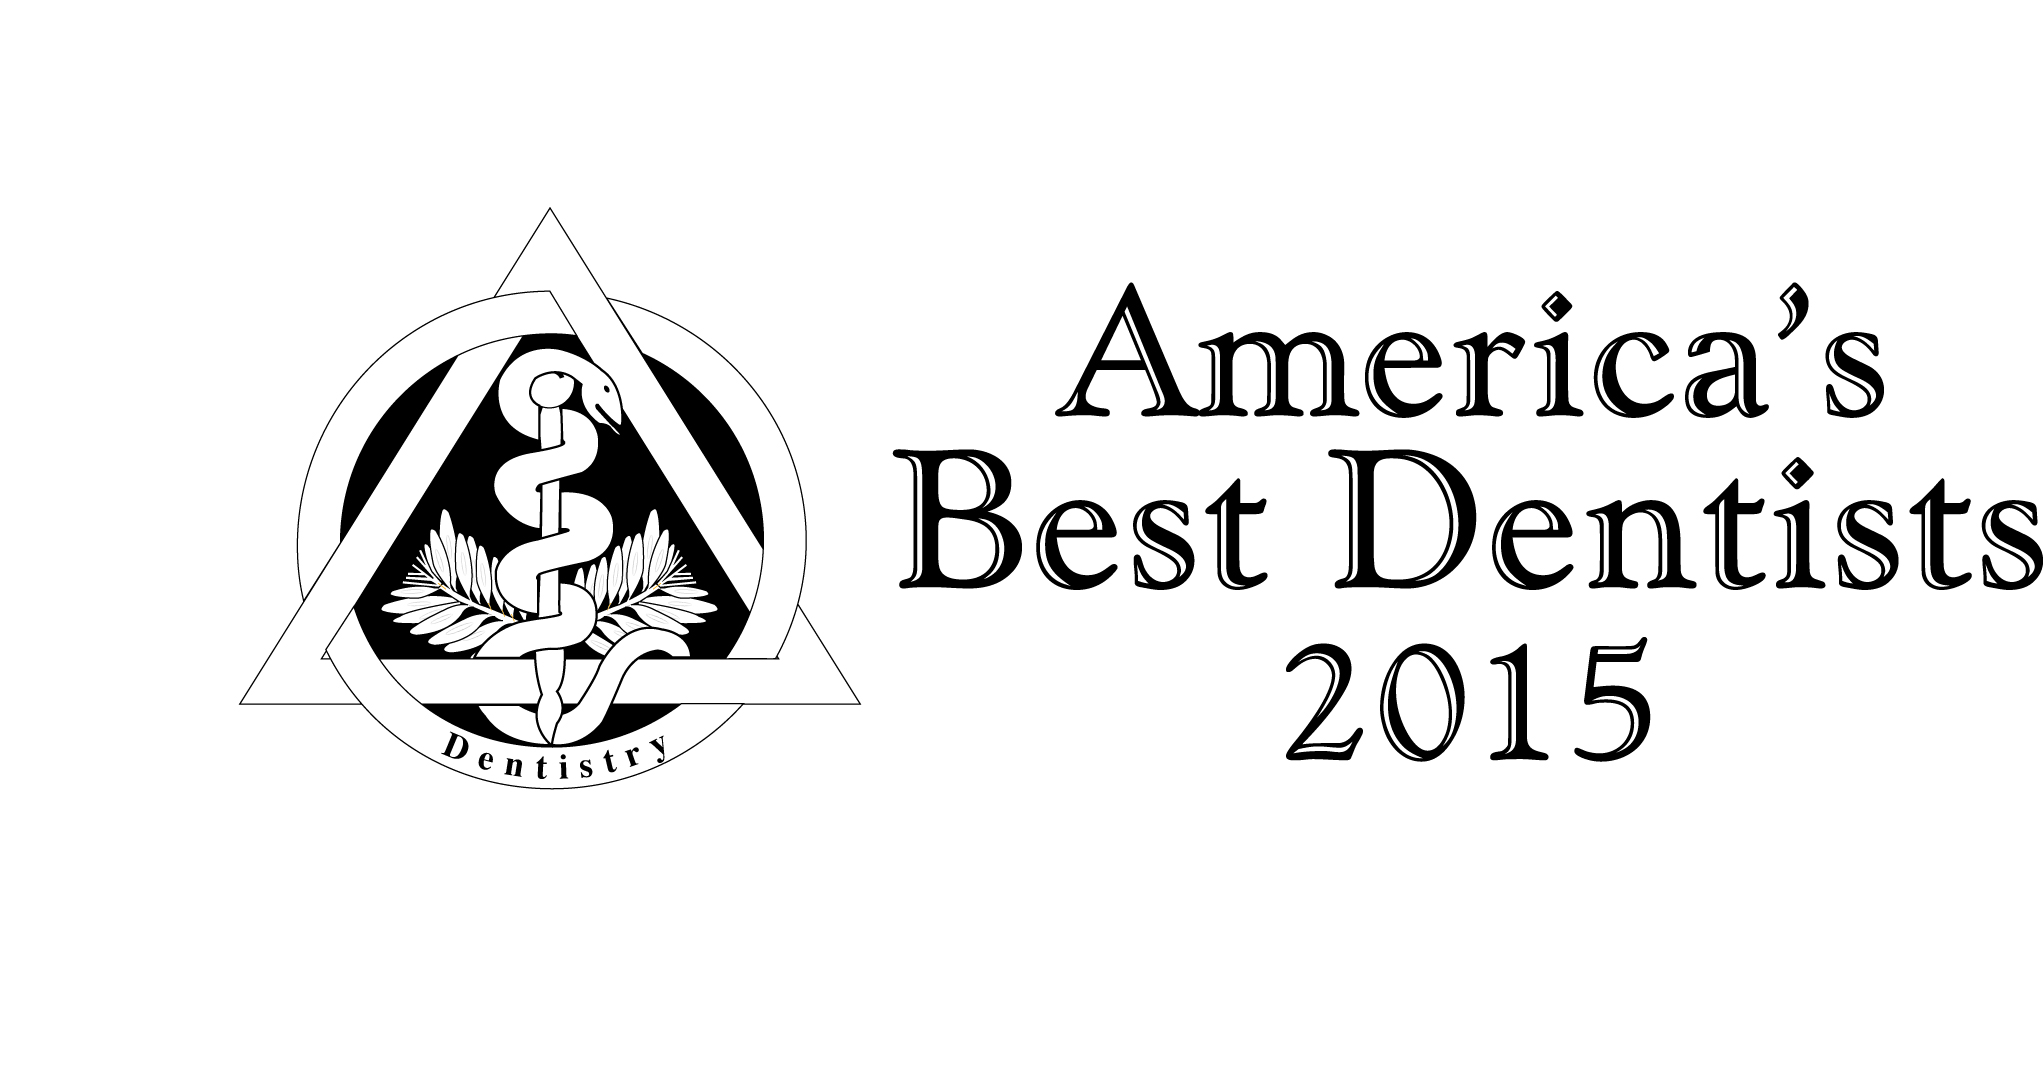 America's Best Dentists Award